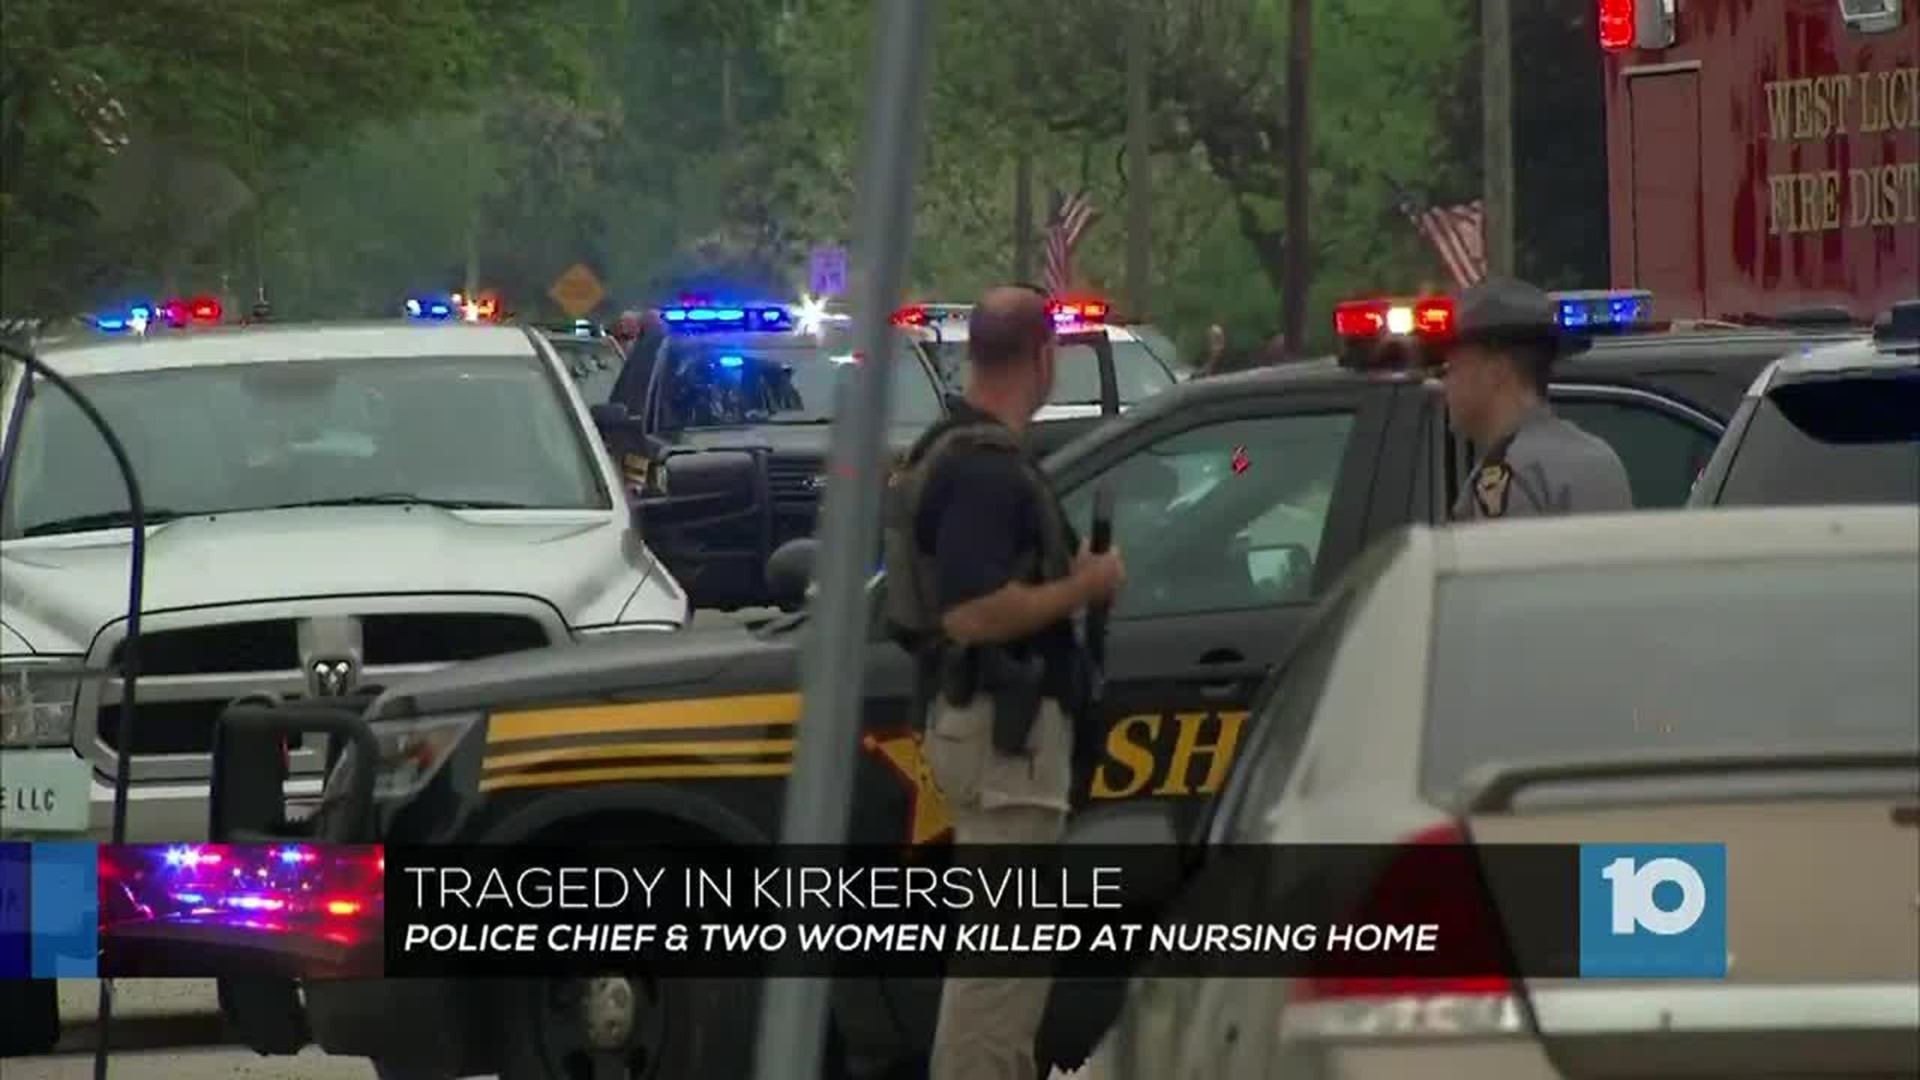 Tragedy in Kirkersville